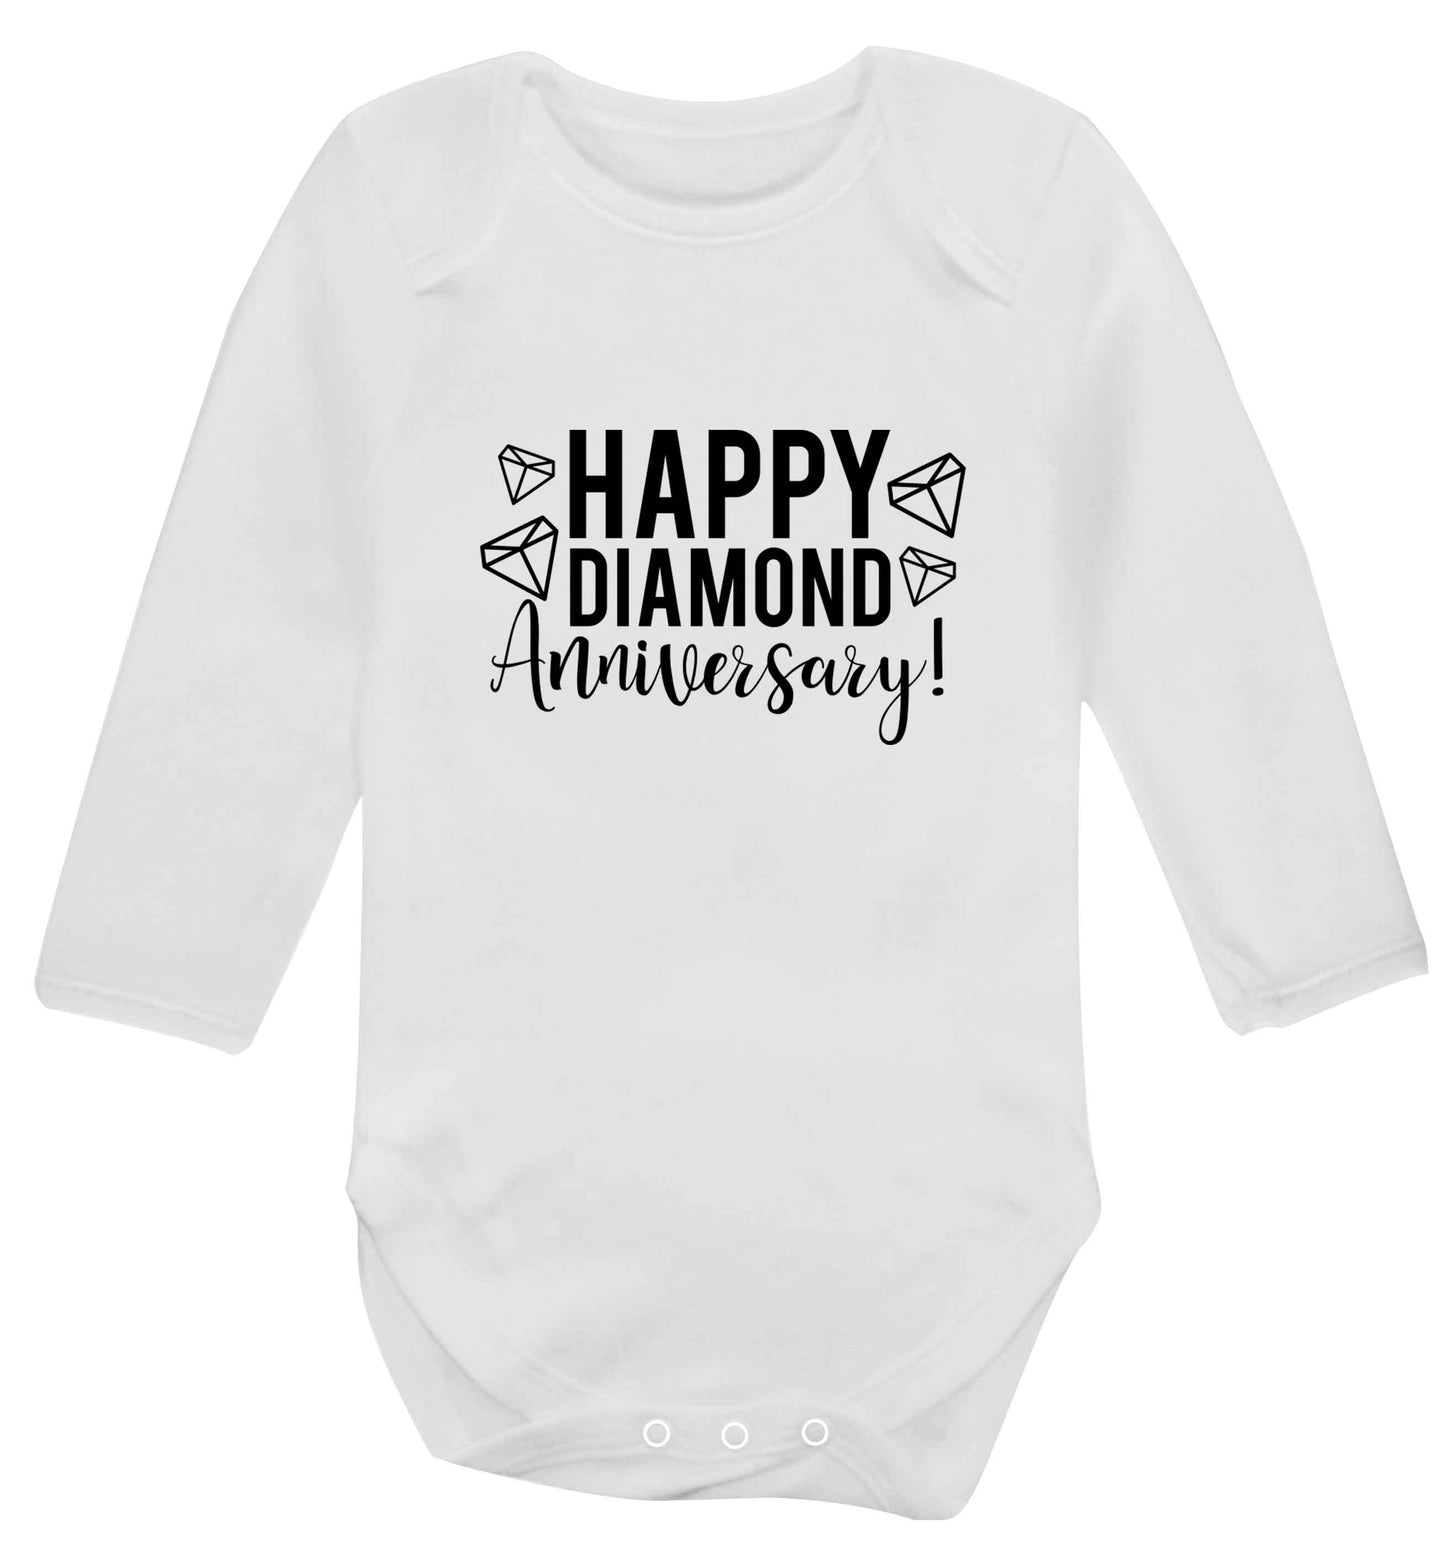 Happy diamond anniversary! baby vest long sleeved white 6-12 months